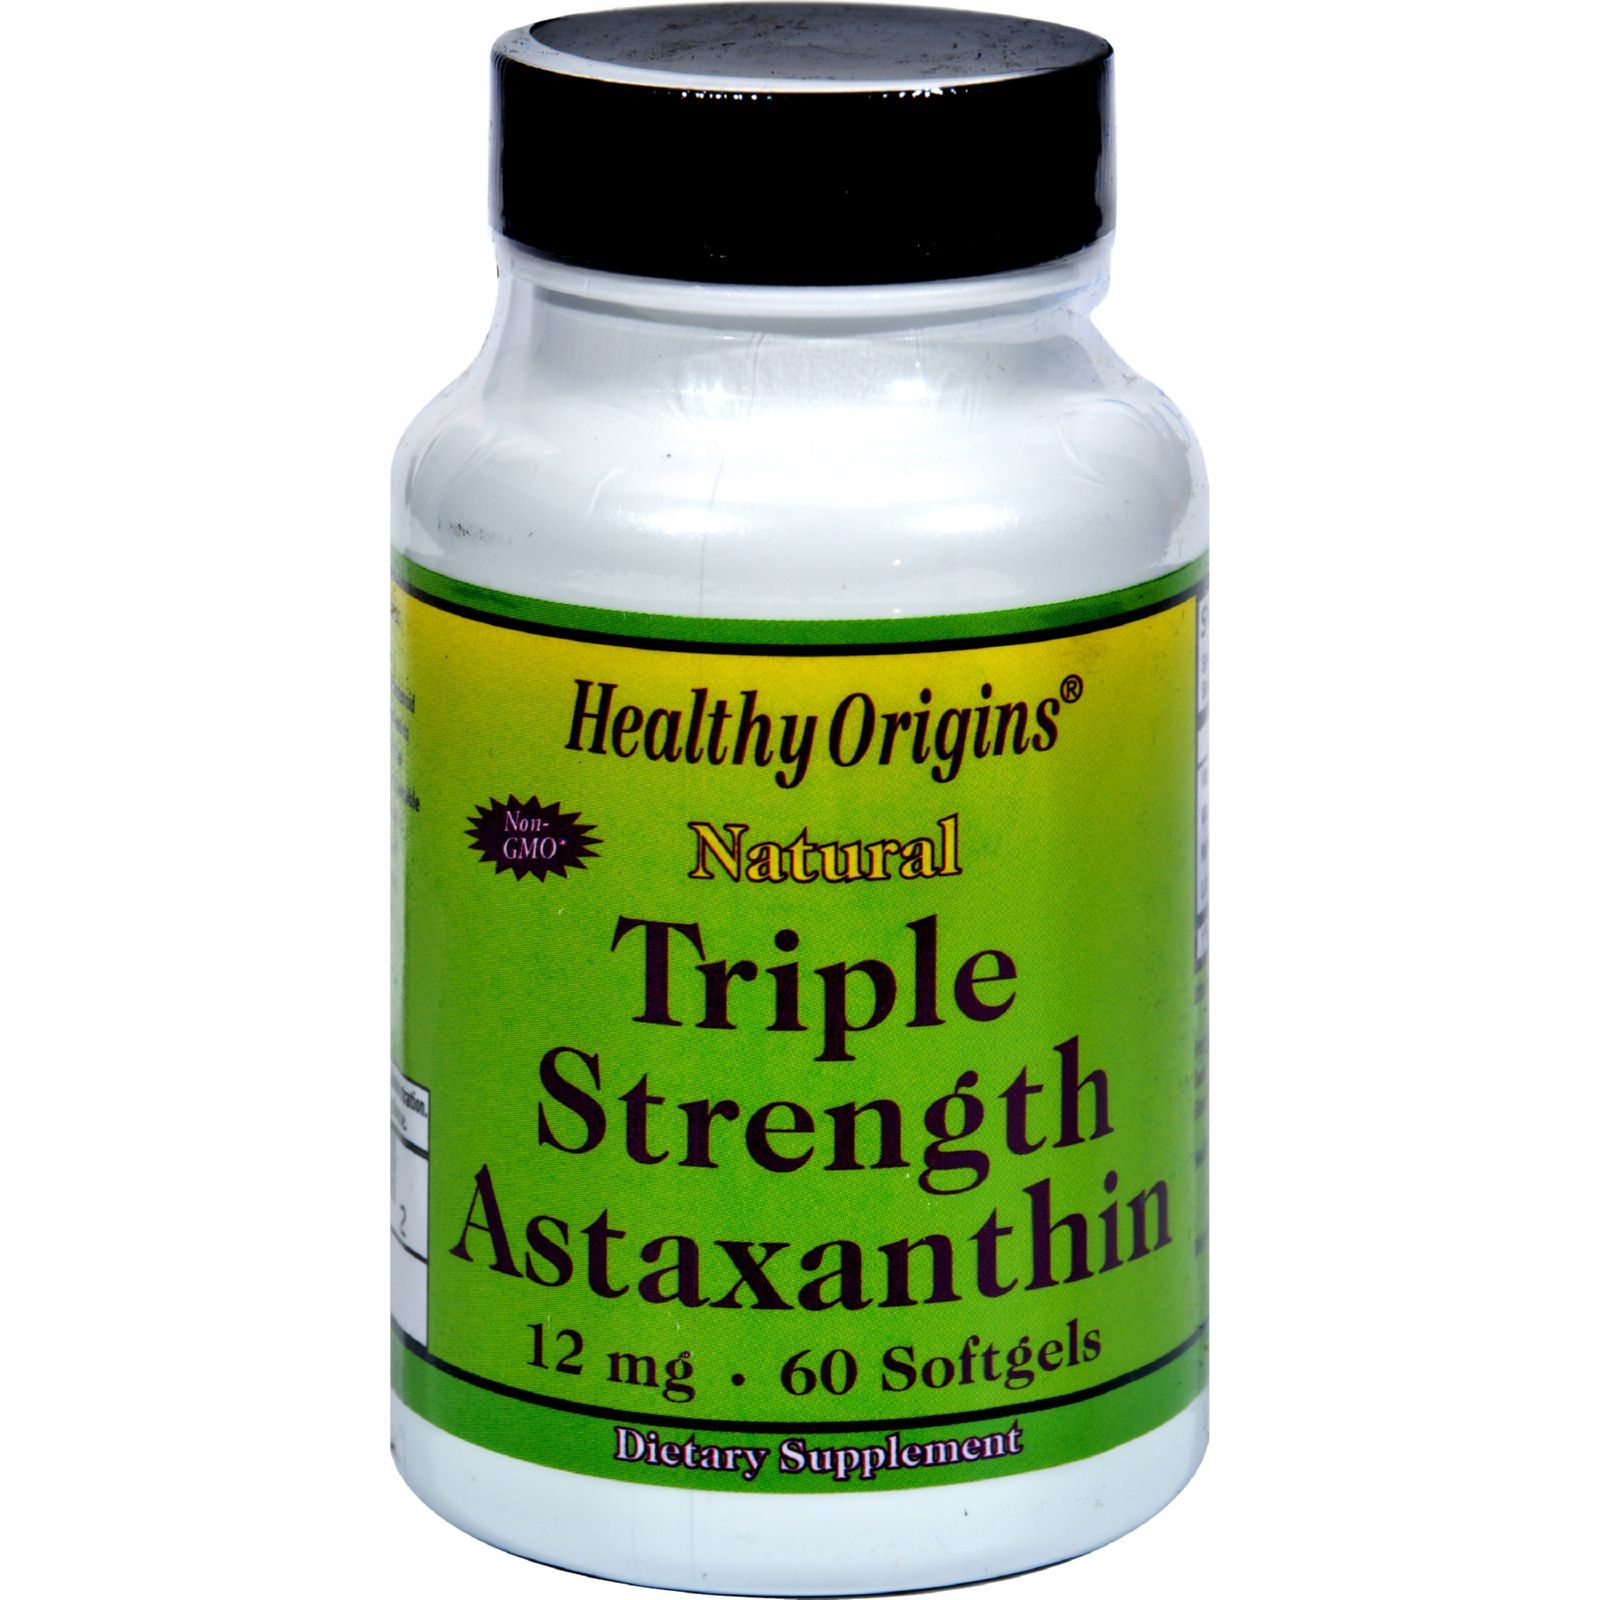 Natural origin. Астаксантин 12 мг. Healthy Origins. Биоастин астаксантин. Iron easy healthy Origins.